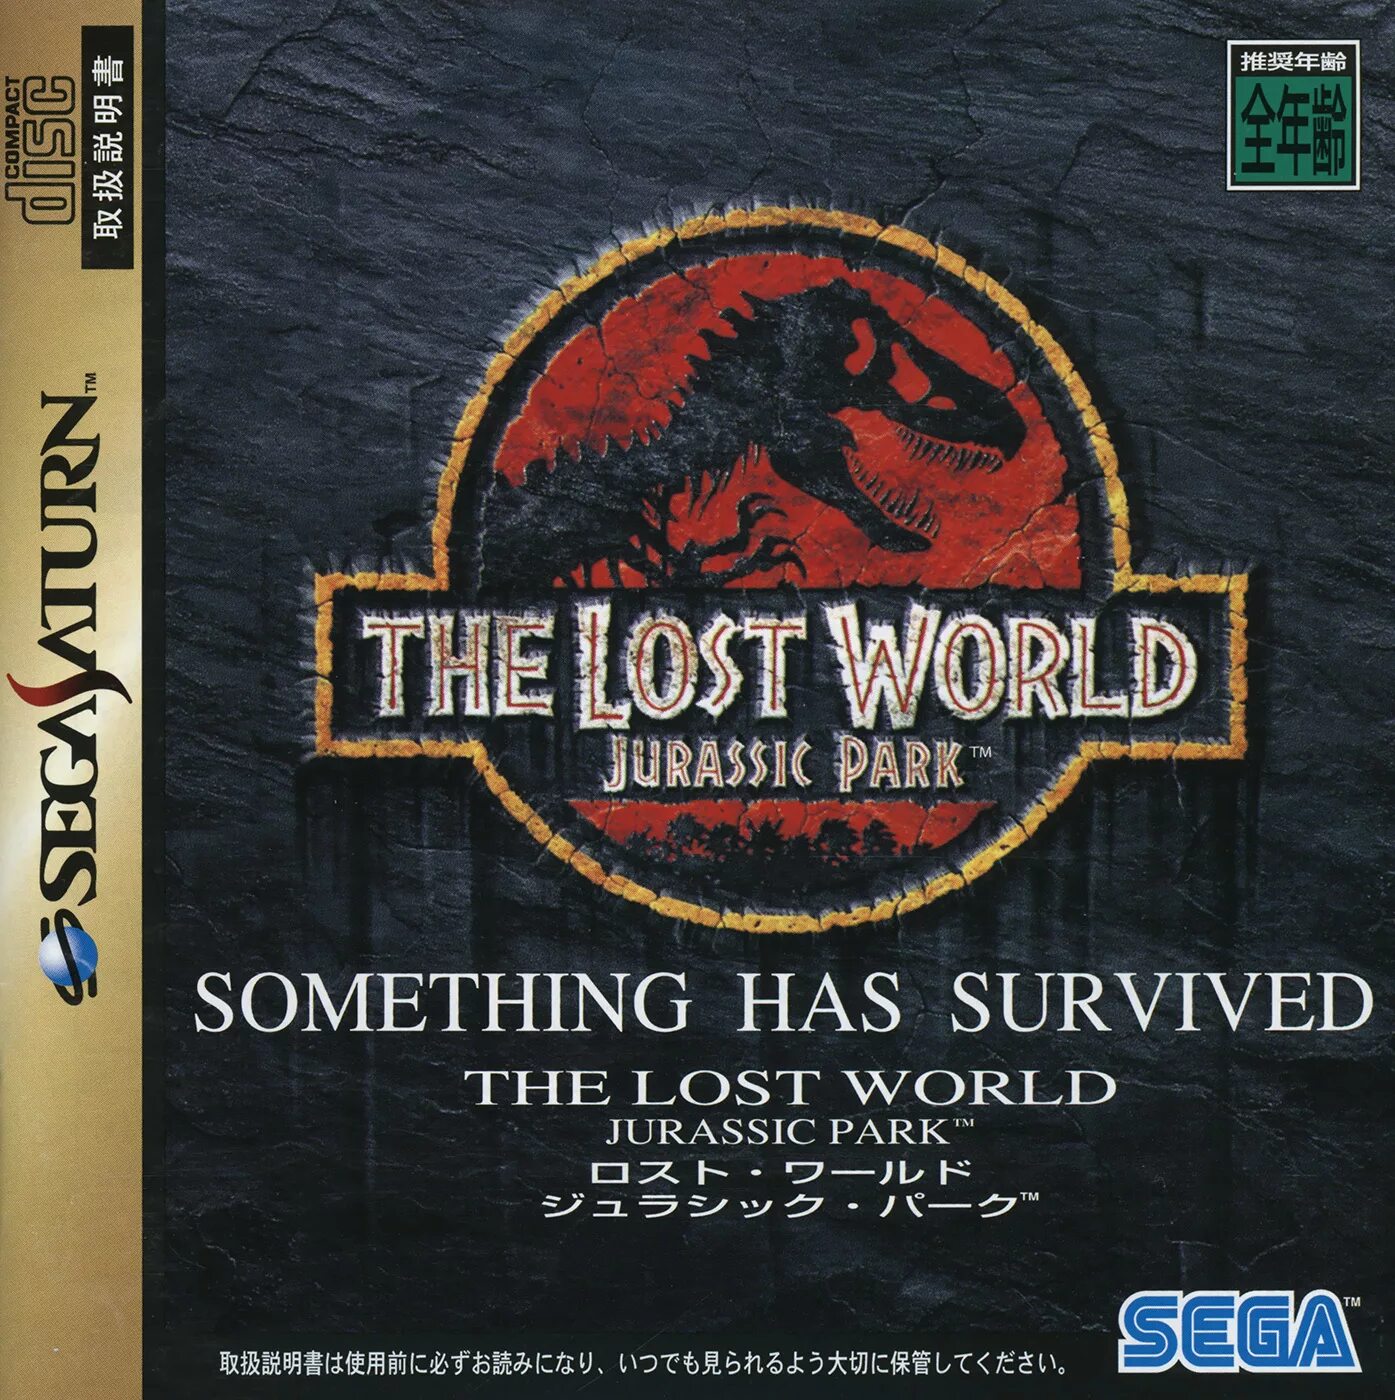 Сега Jurassic Park 3 the Lost World. The Lost World: Jurassic Park сега. Jurassic Park 2 Sega. Картридж Sega мир Юрского периода.